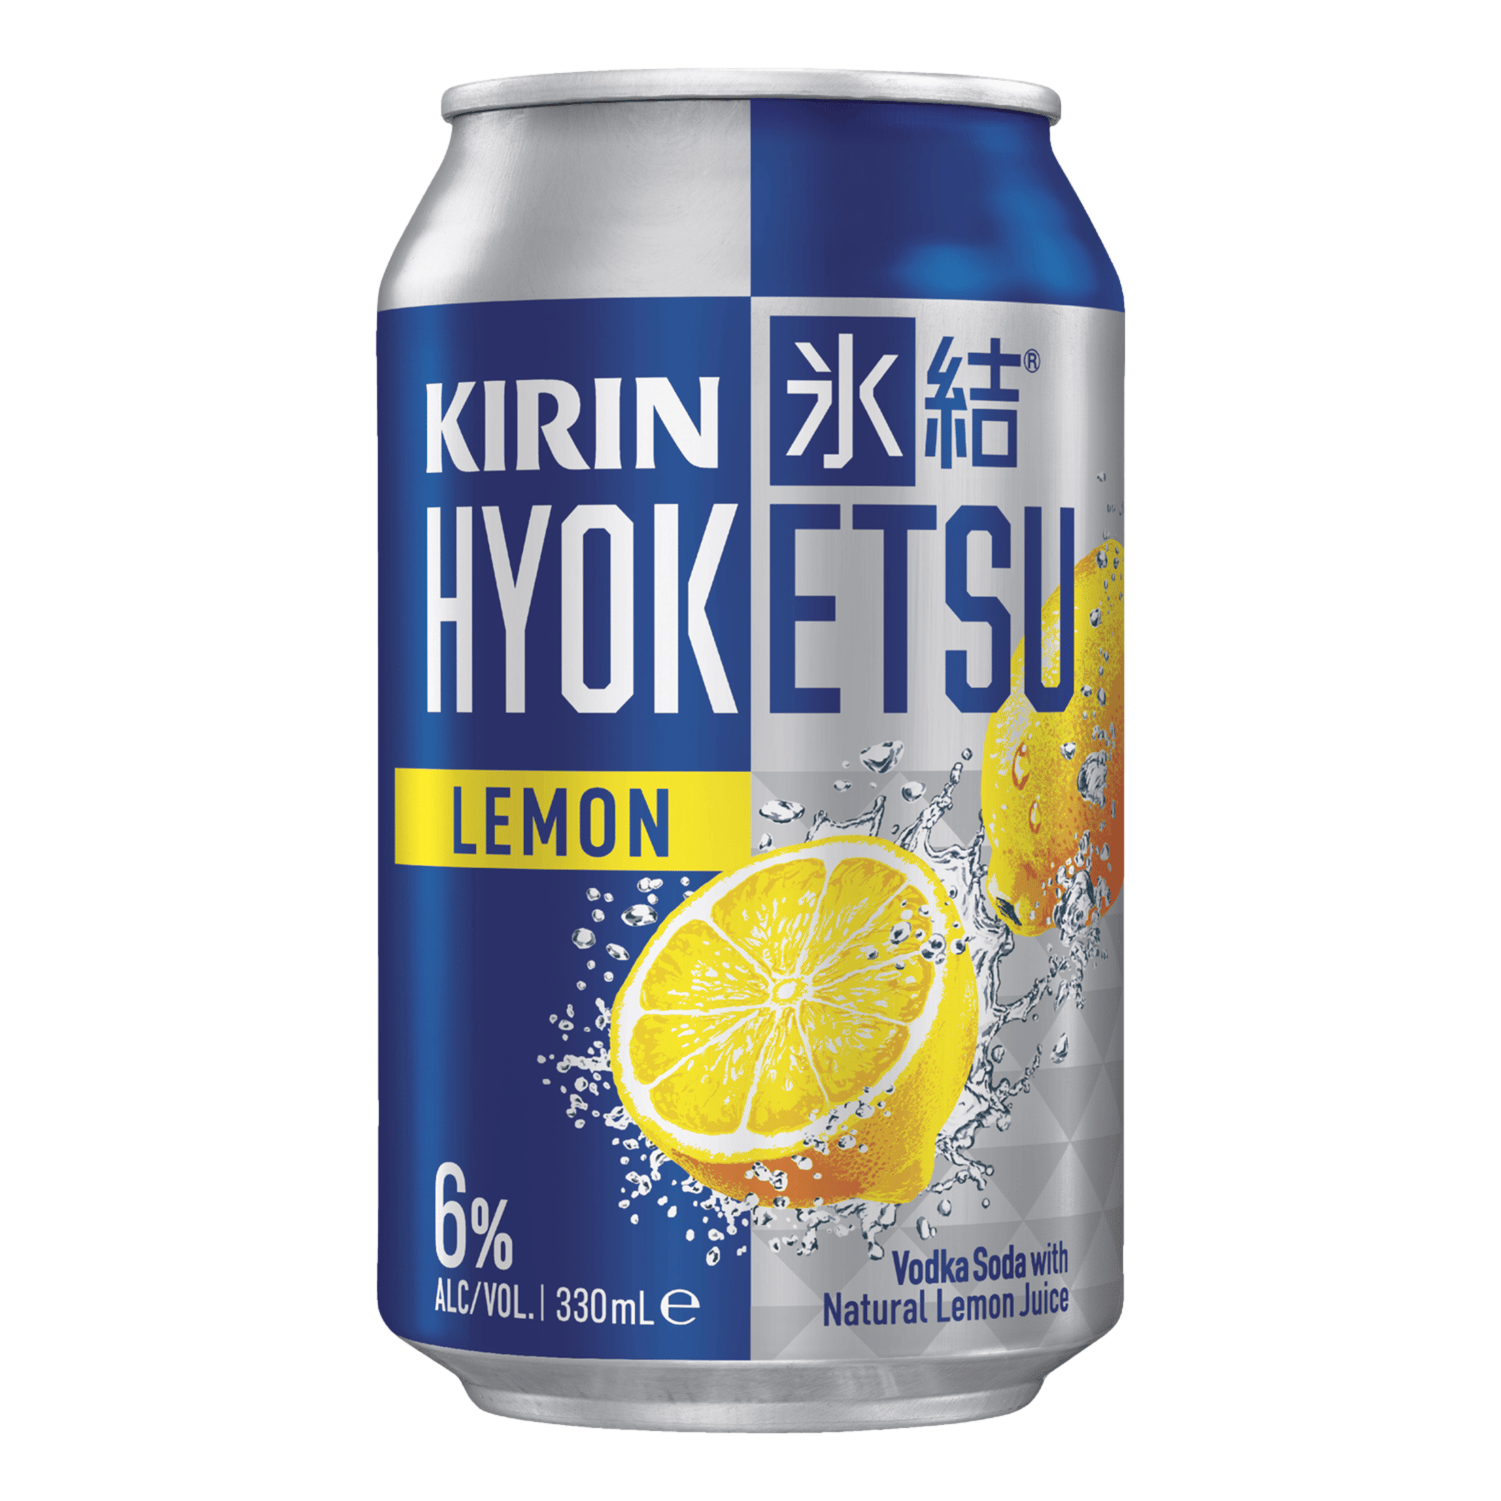 Kirin Hyoketsu Lemon 350ml Can Single